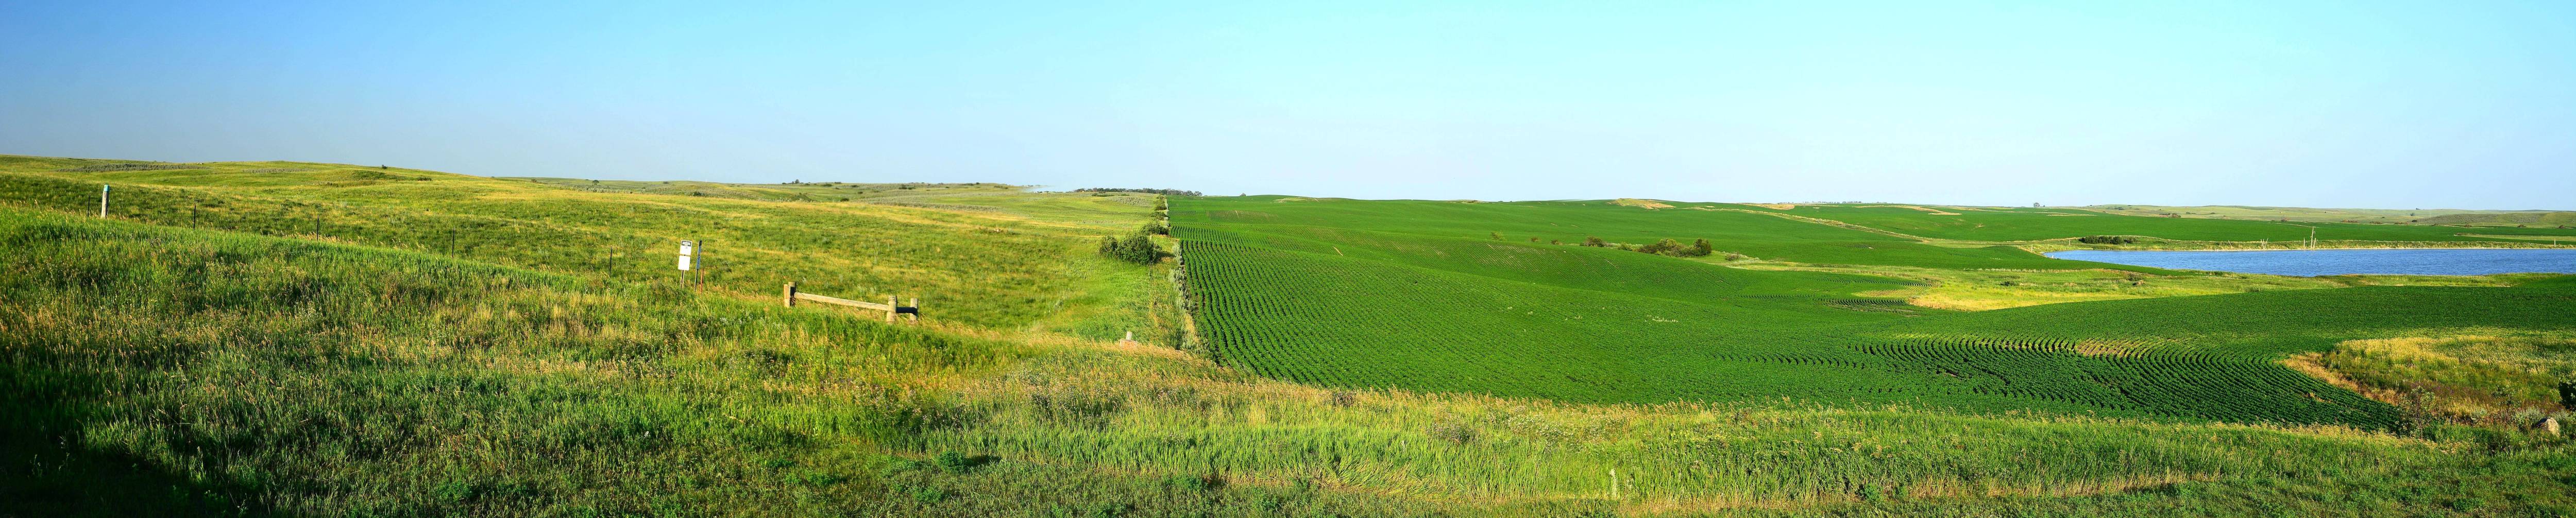 Landscape image of a prairie abutting a cornfield